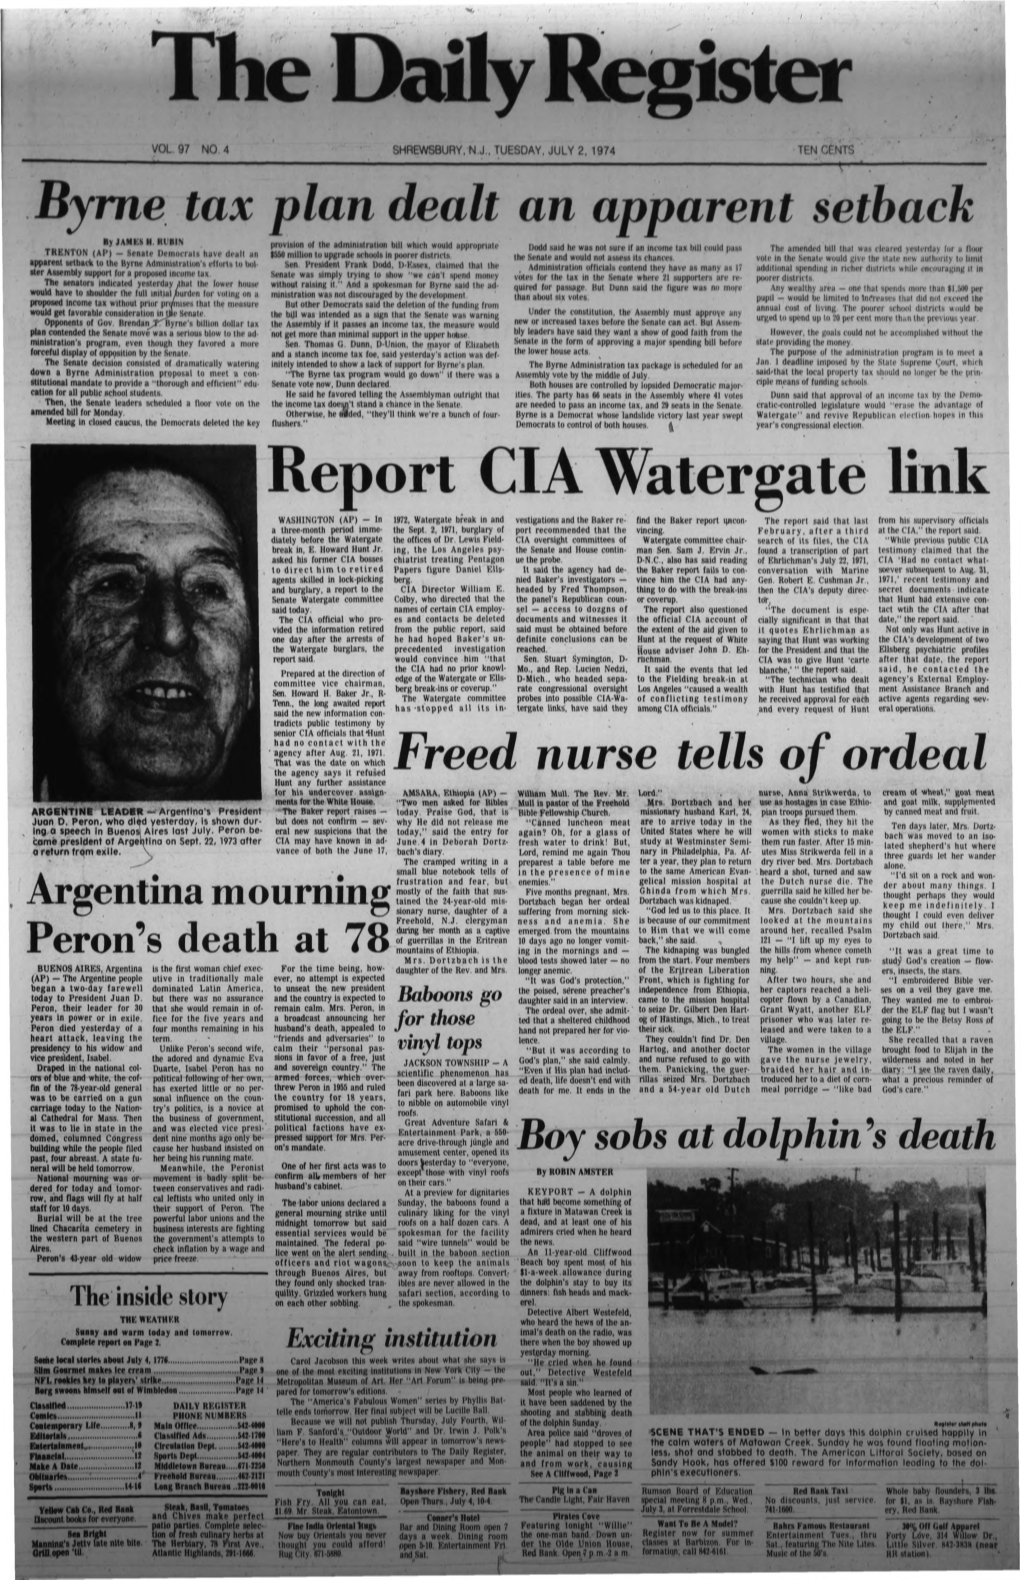 Report CIA Watergate Link